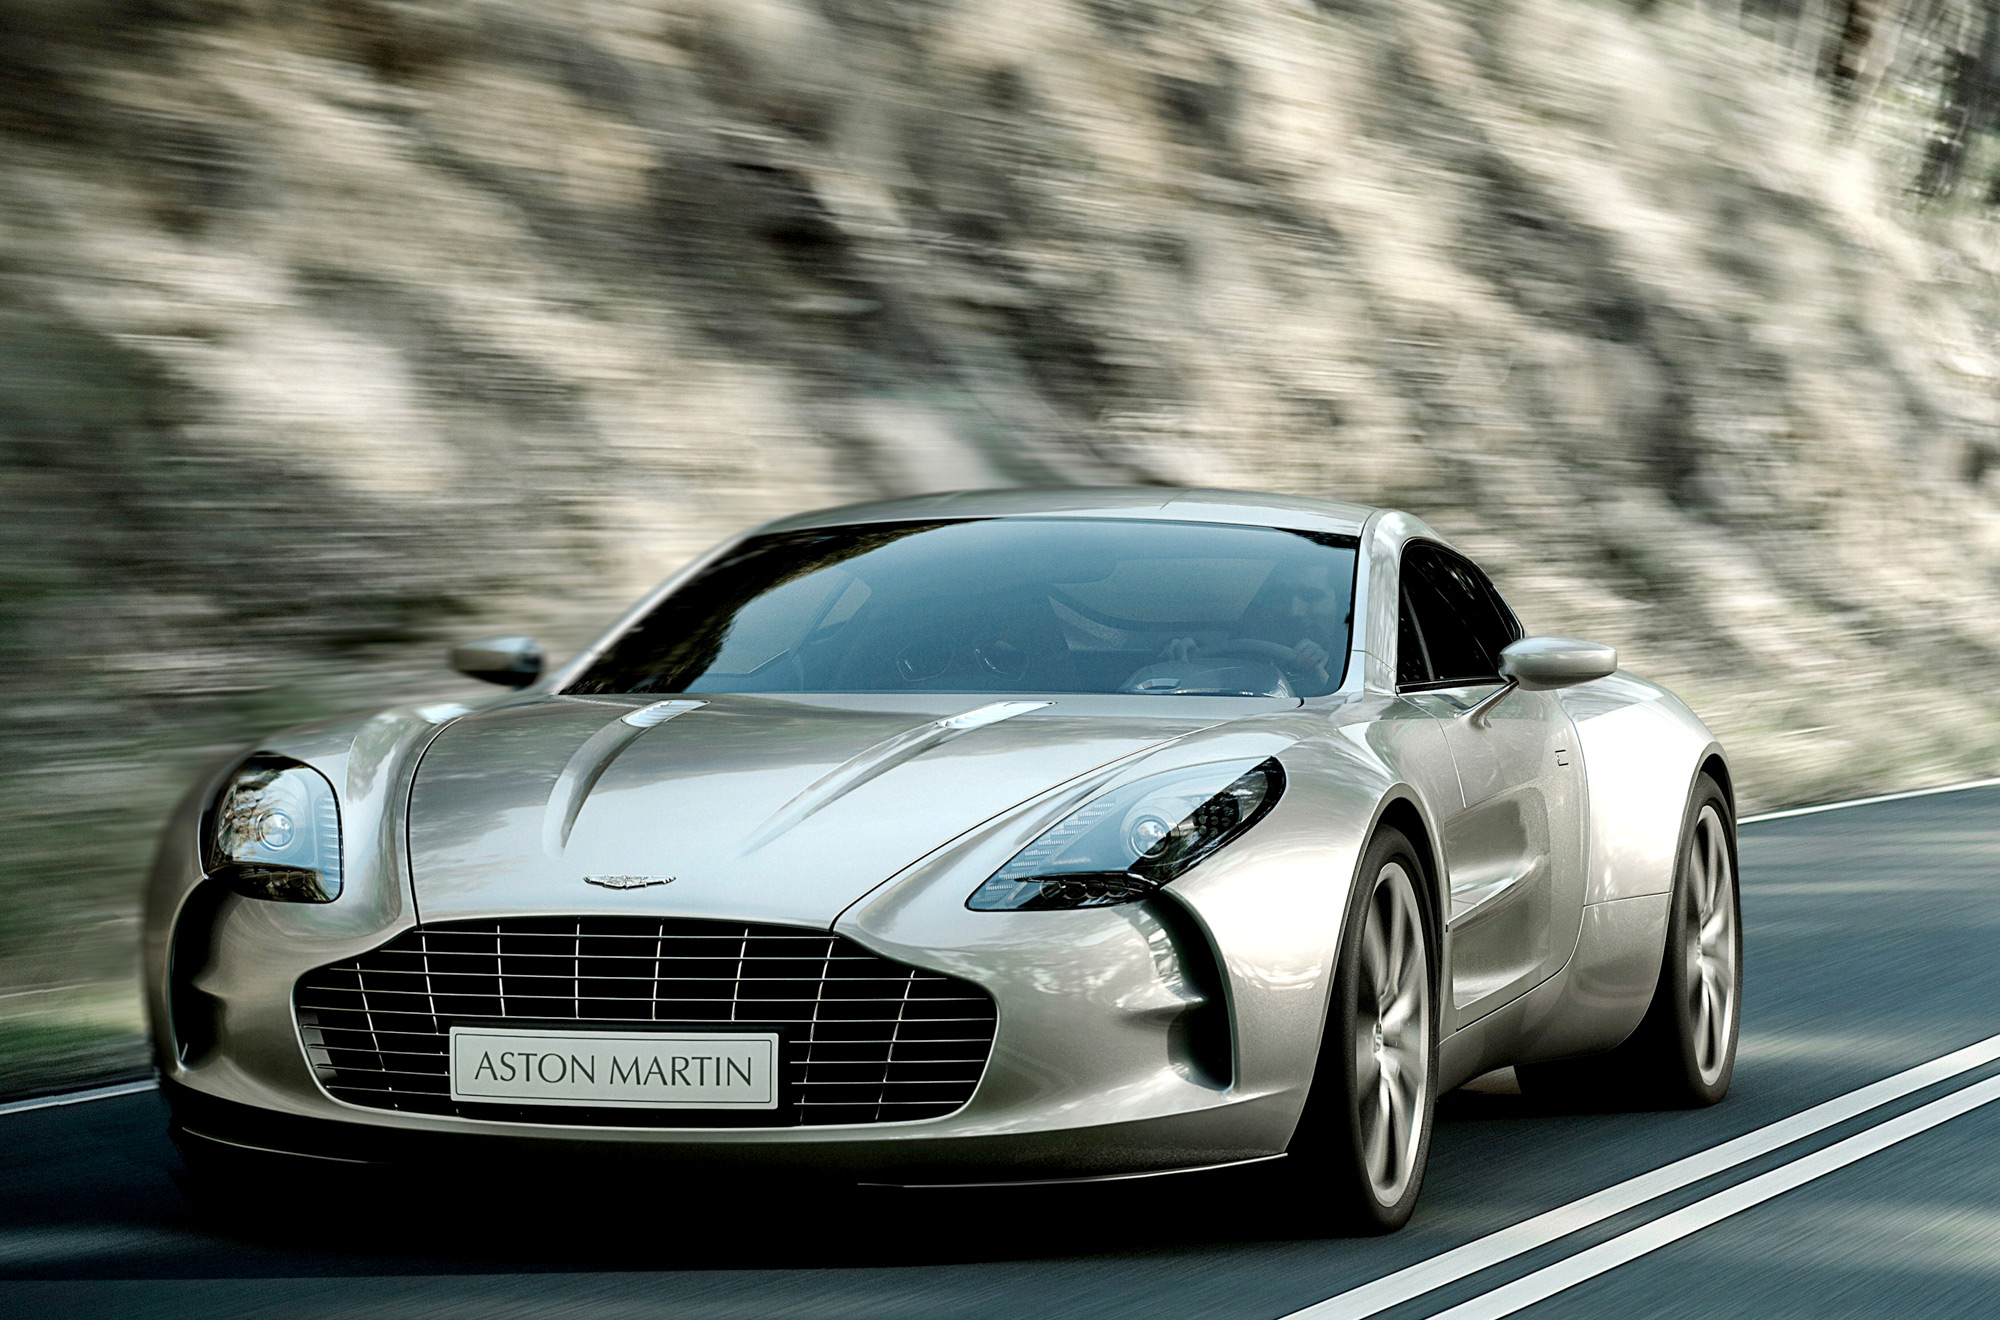 The Future Of Luxury: The Aston Martin One 77 Concept